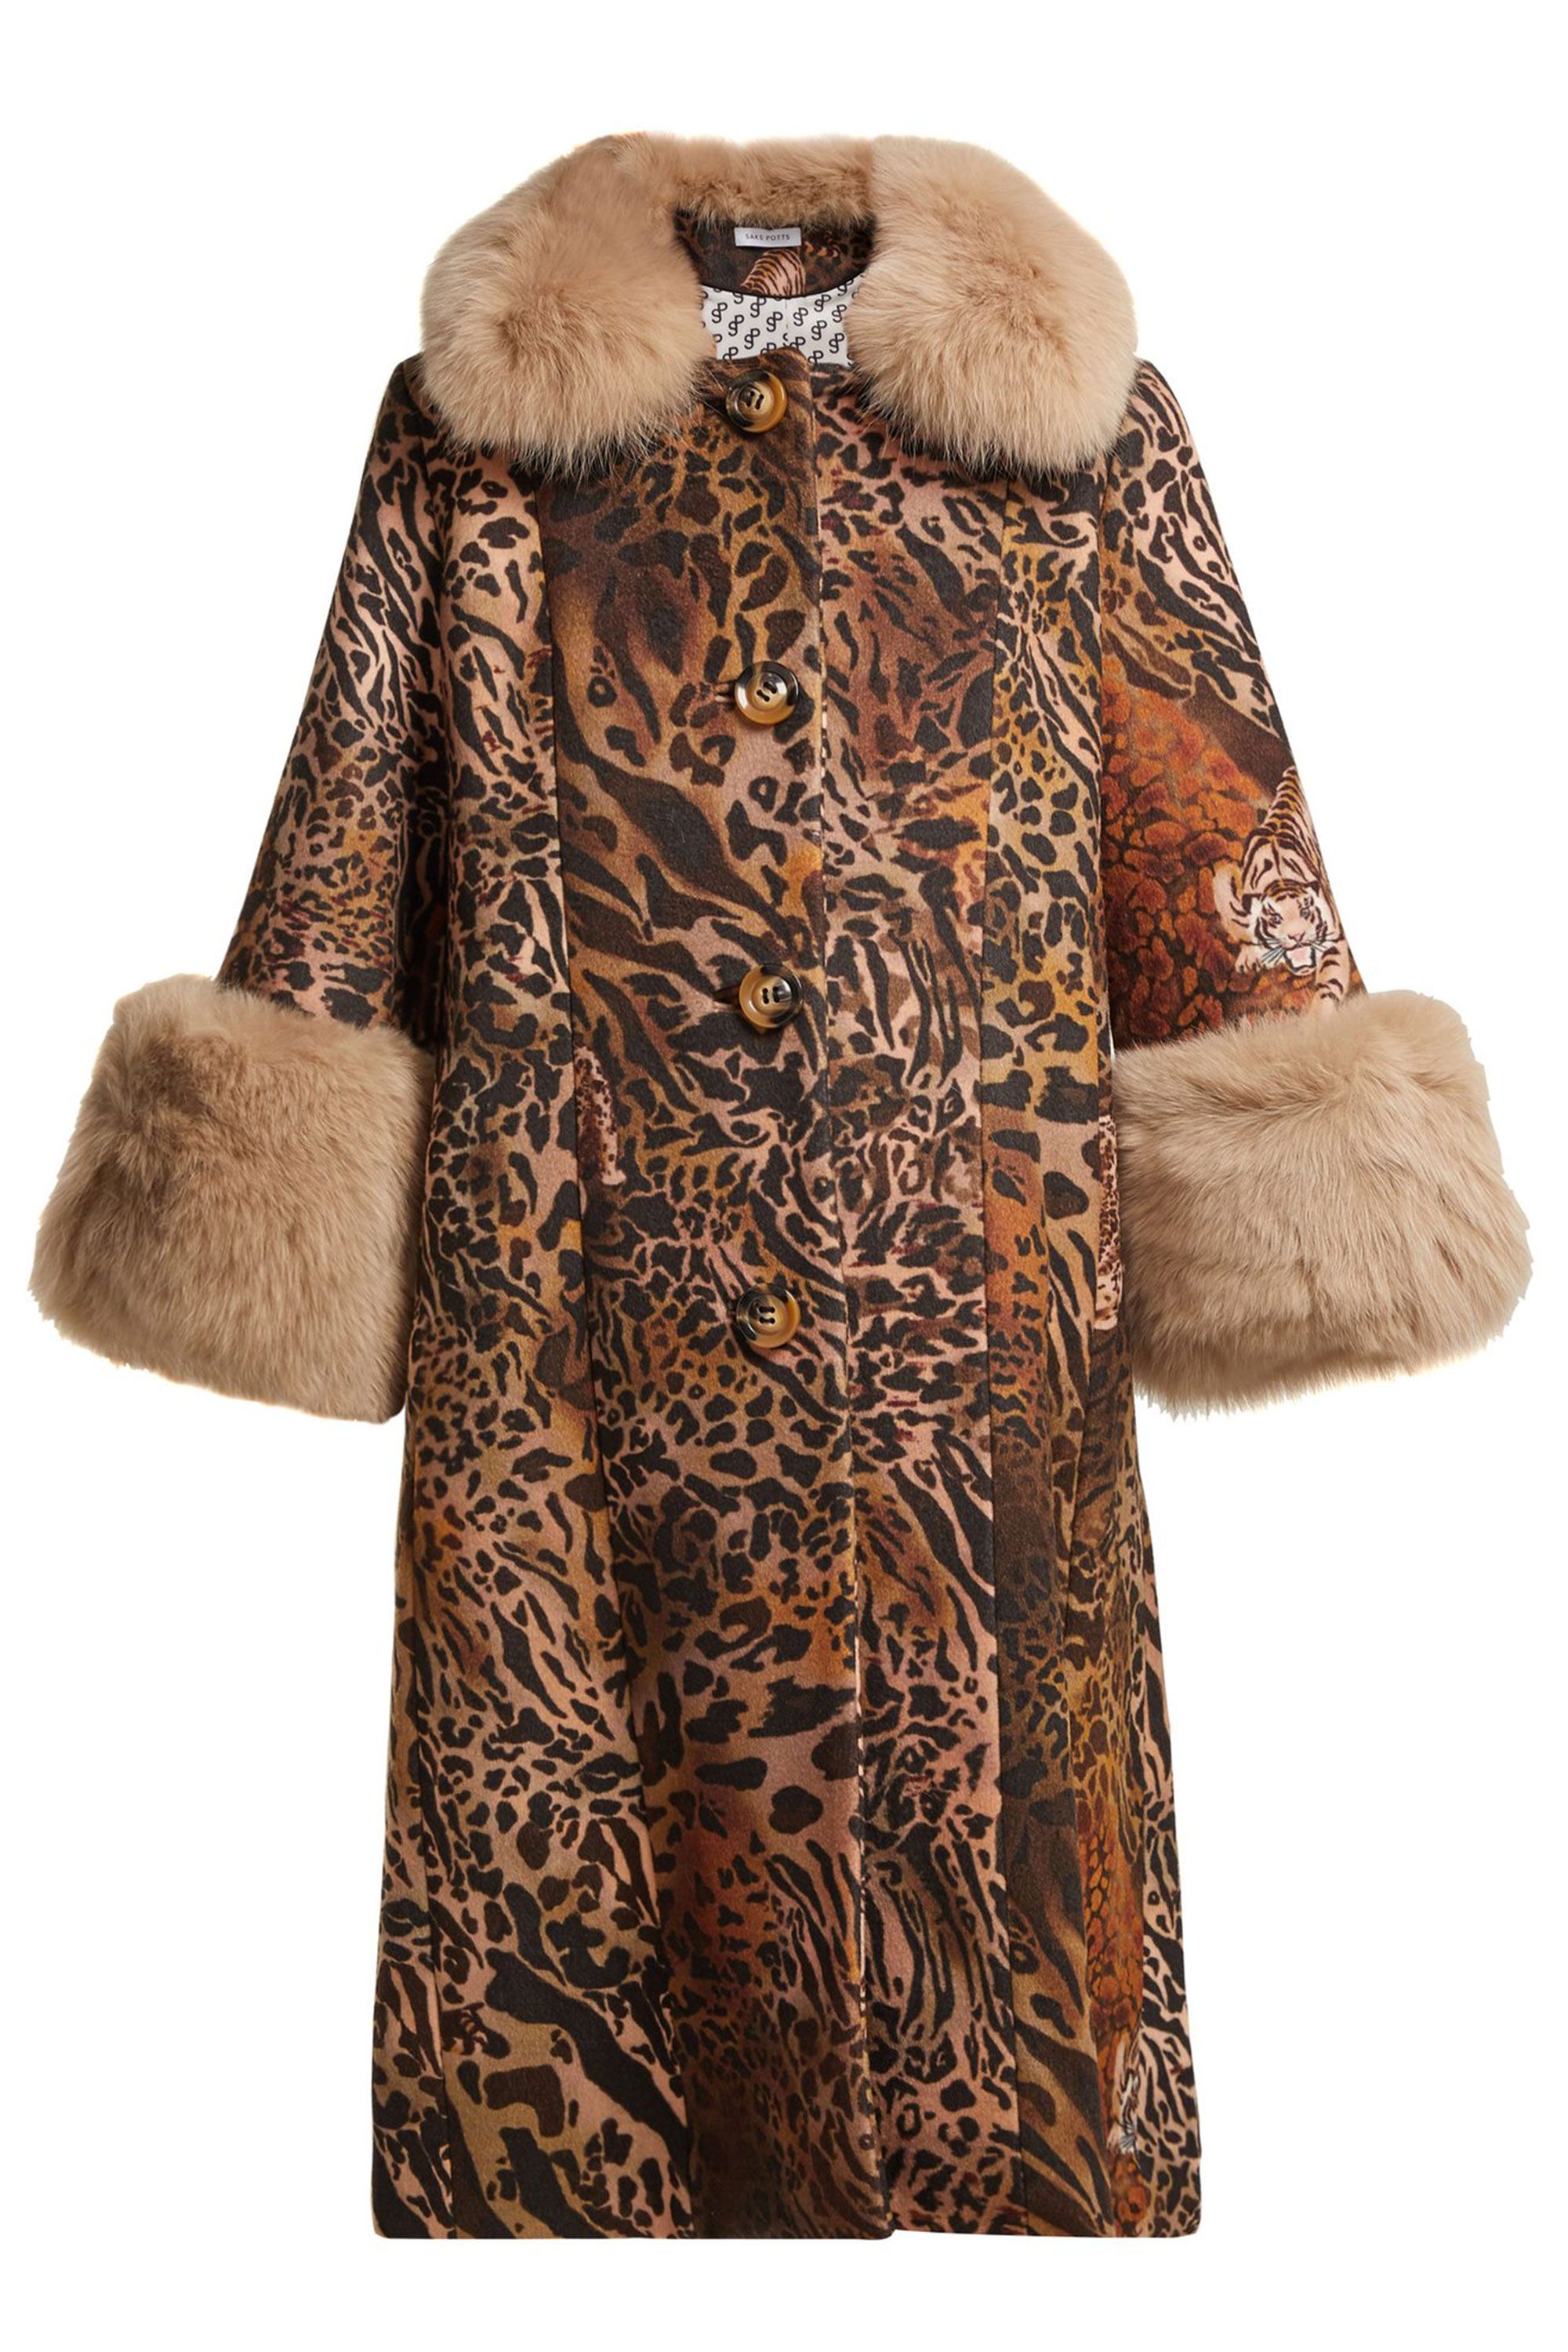 Genuine Leopard Fur Coat - Tradingbasis